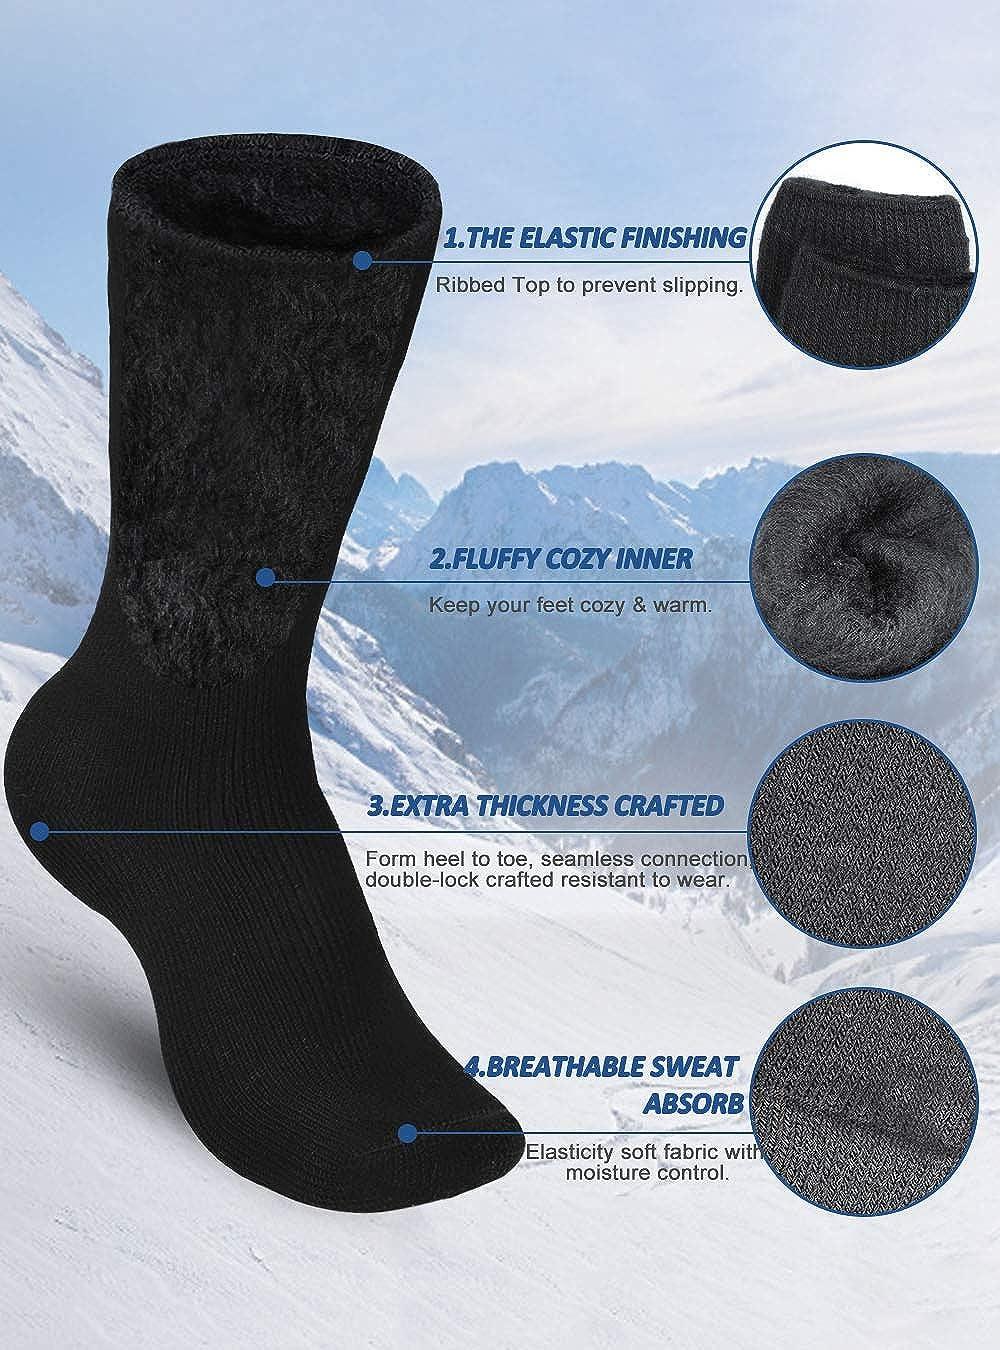 Men's 4 Pack Winter Thick Socks Warm Comfort Soft Fuzzy Floor Socks